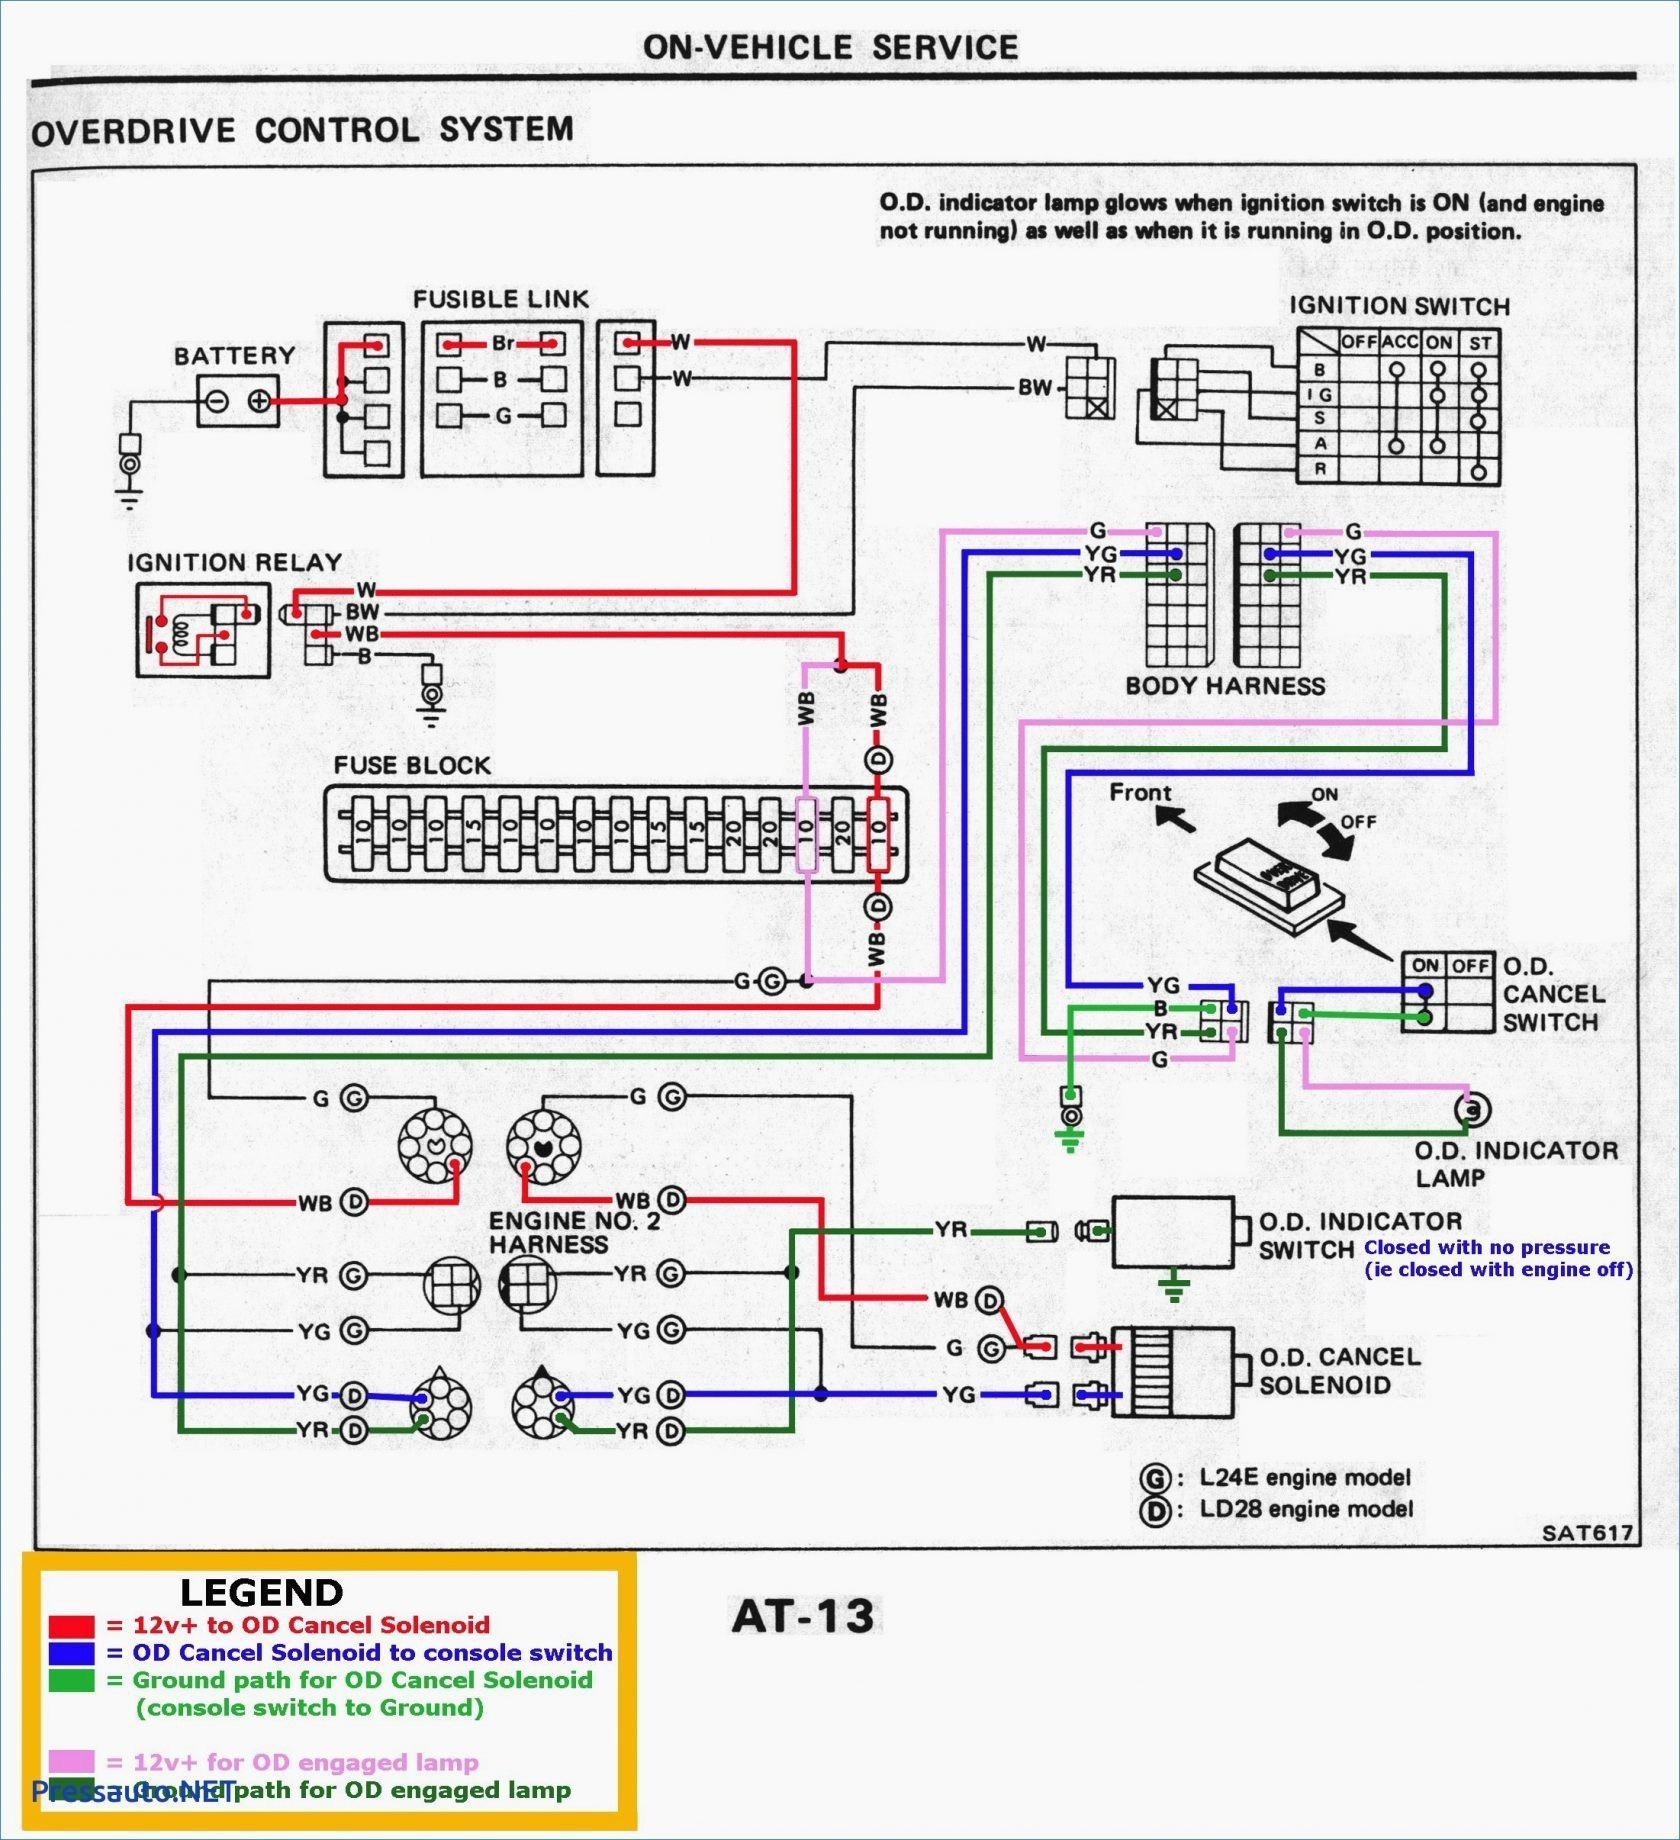 Car Audio Amplifier Wiring Diagram Car Wiring Harness Diagram Wiring Diagram toolbox Of Car Audio Amplifier Wiring Diagram